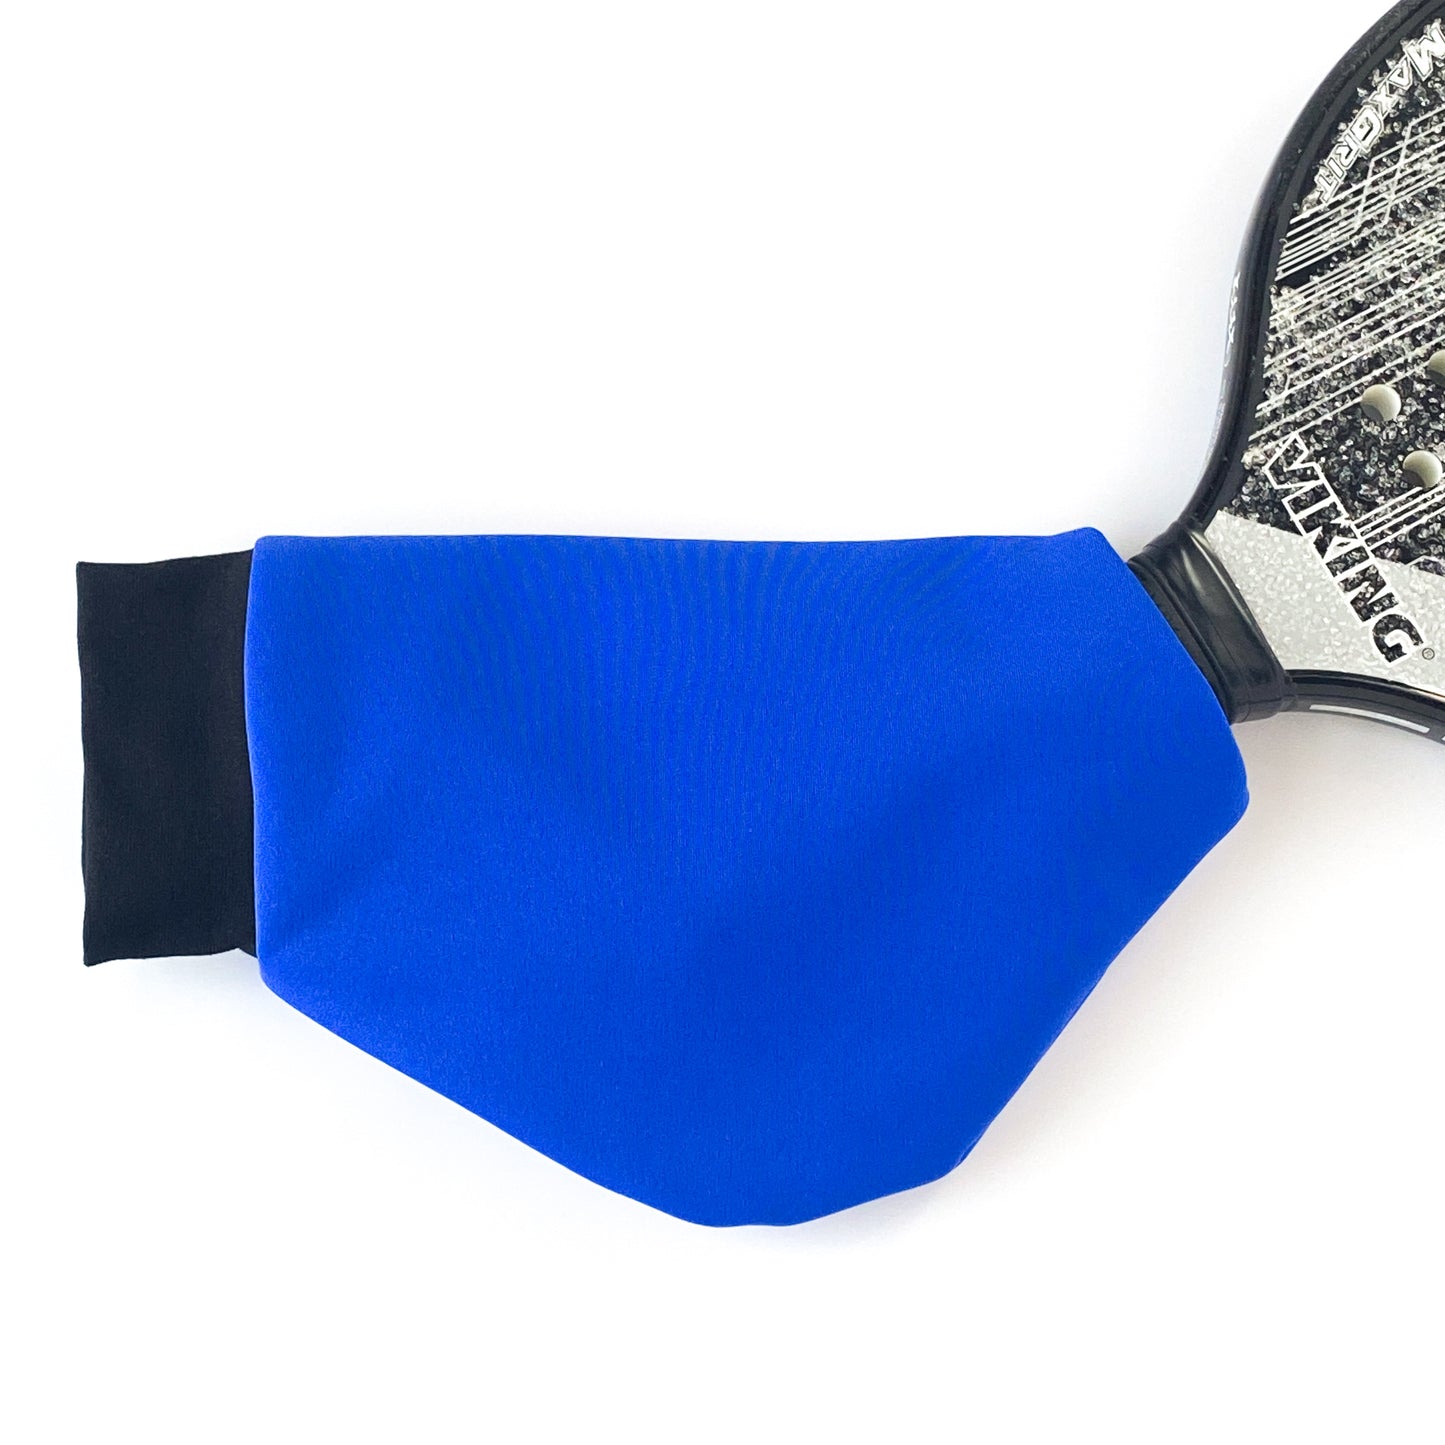 the waterproof paddle tennis mitt. platform tennis mitt.  paddle tennis glove. platform tennis glove.